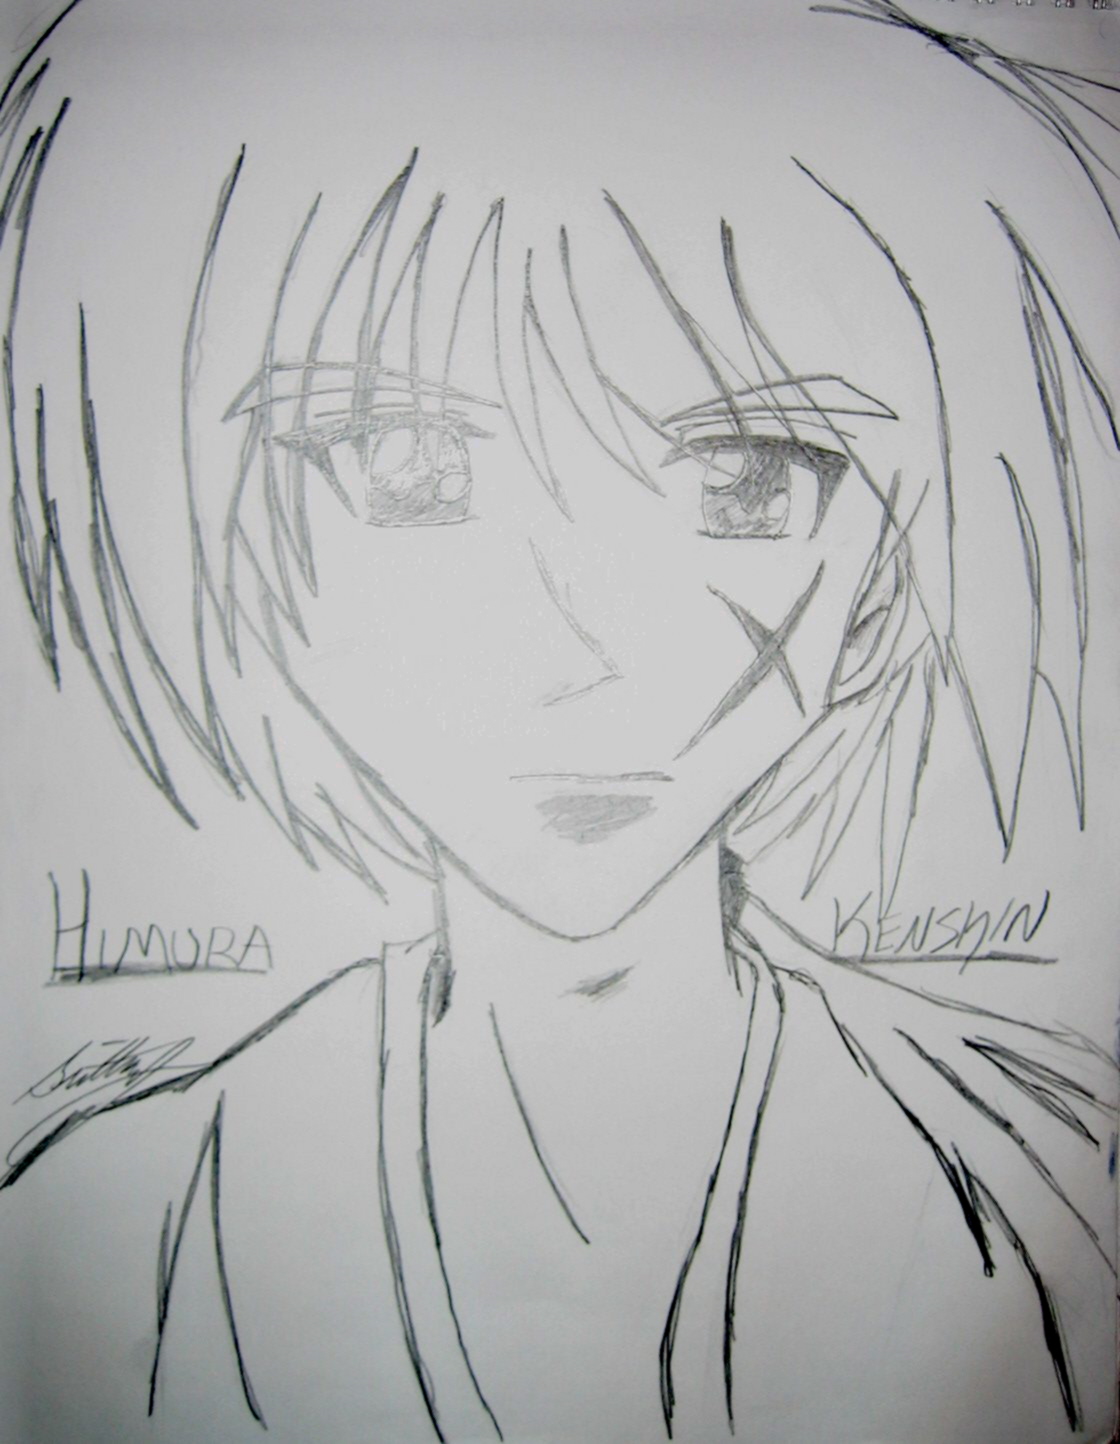 Himura Kenshin by alucardsmistress